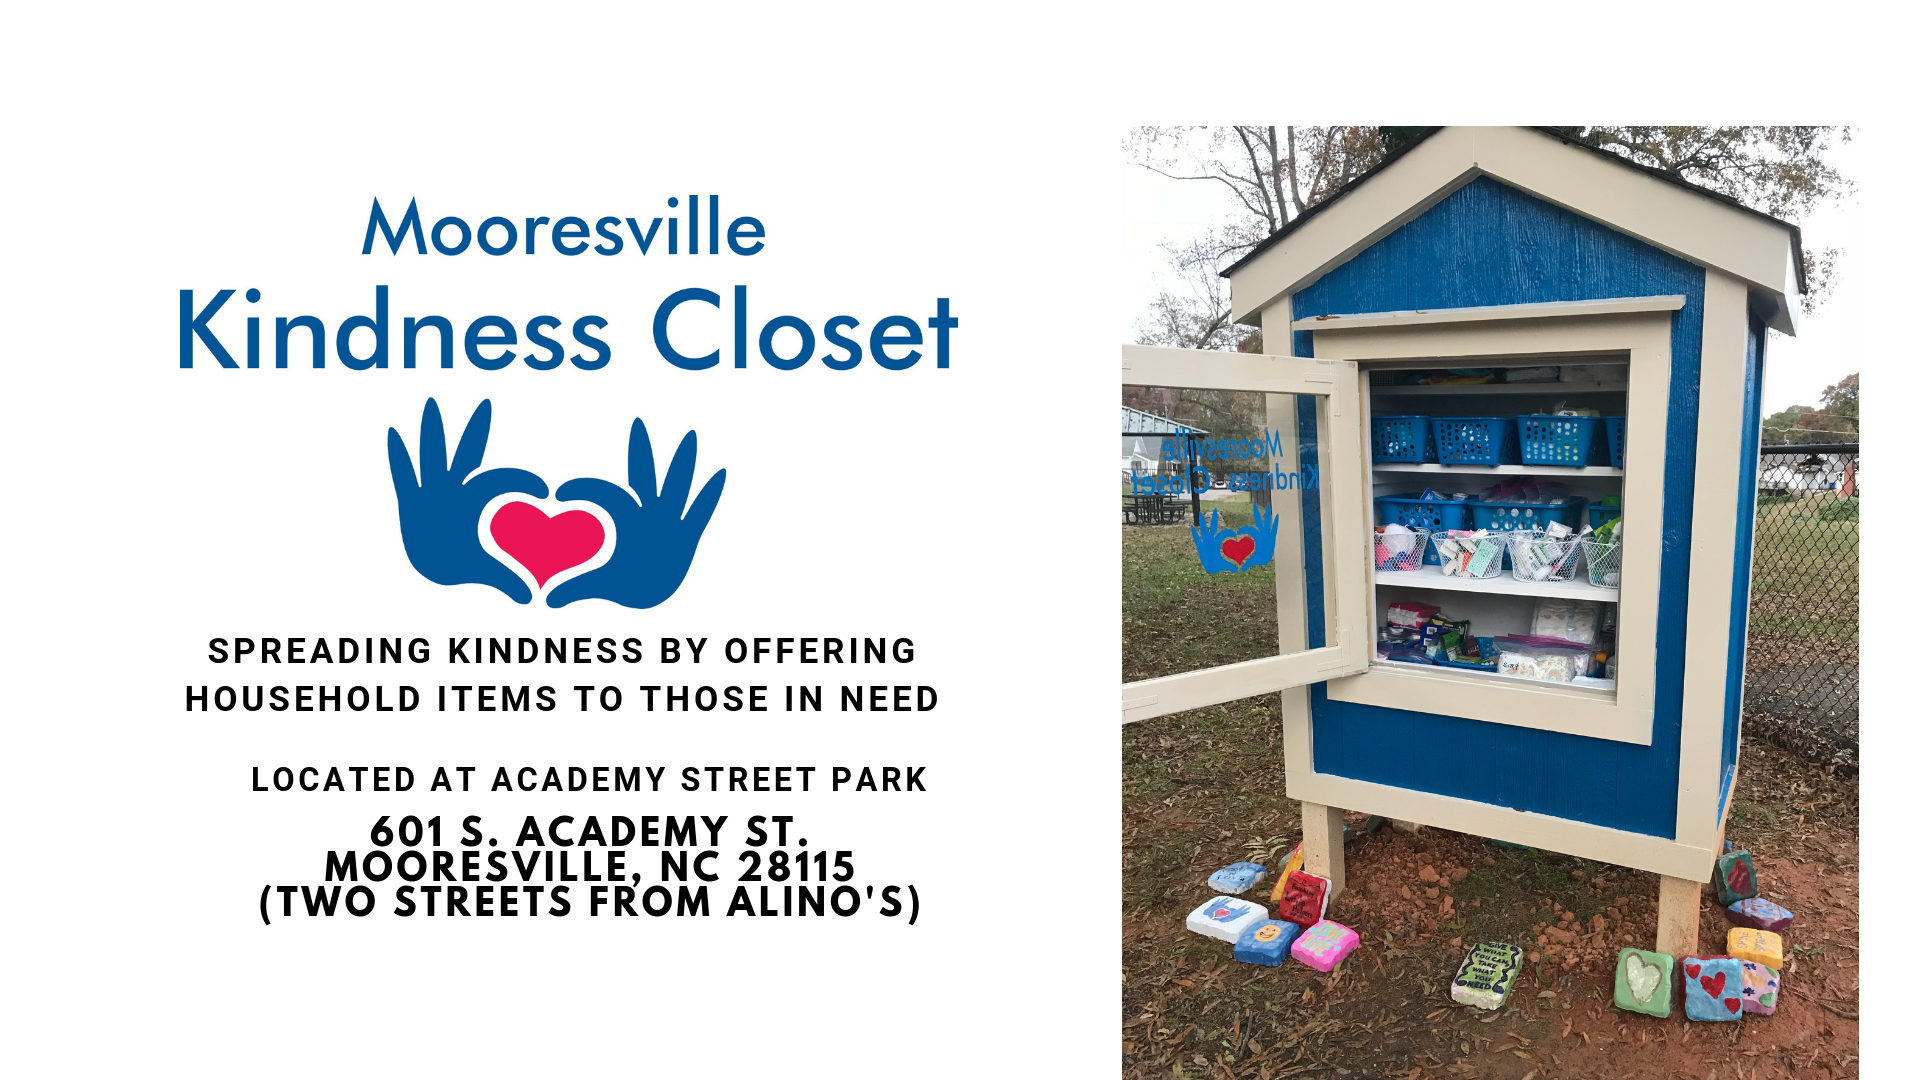 Mooresville Kindness Closet Photo 1